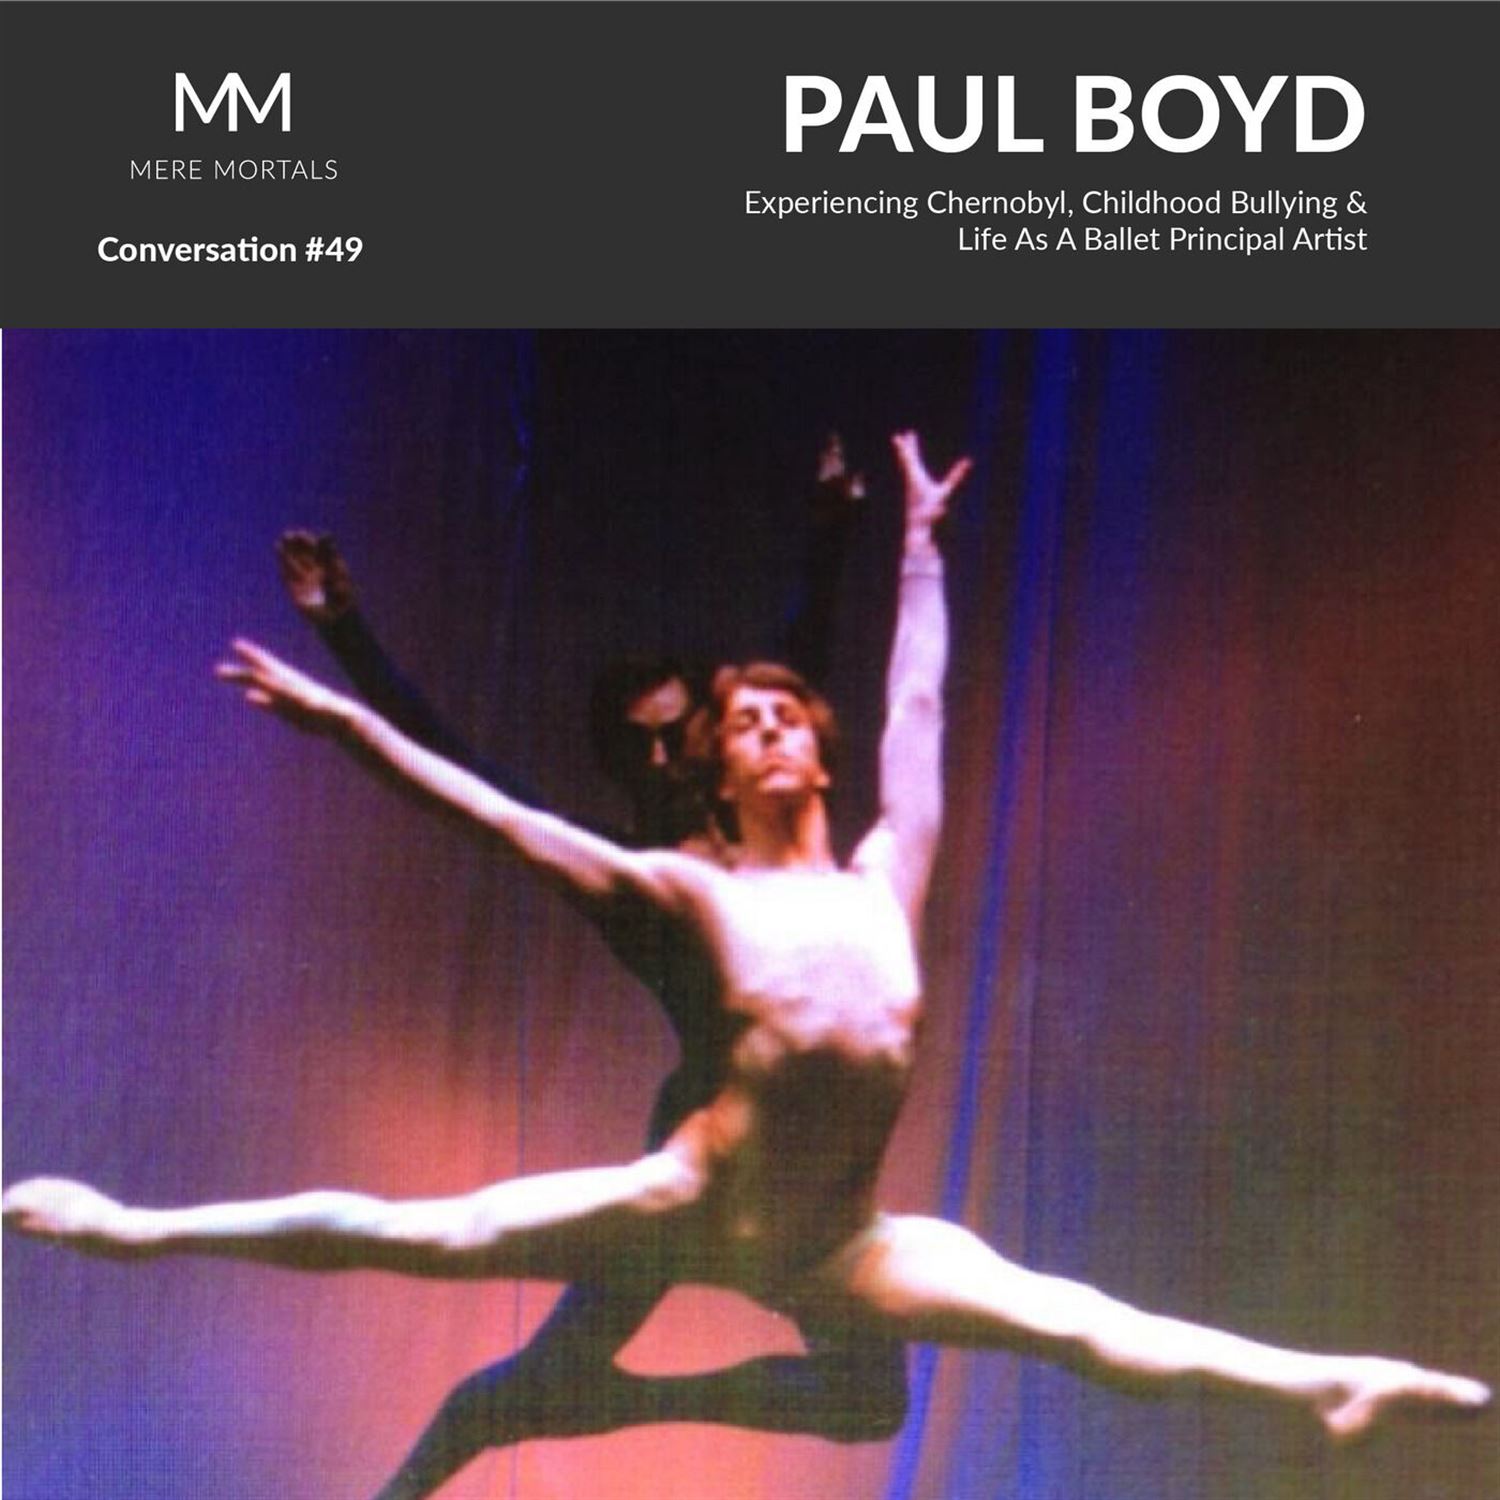 PAUL BOYD | Experiencing Chernobyl, Childhood Bullying & Life As A Ballet Principal Artist